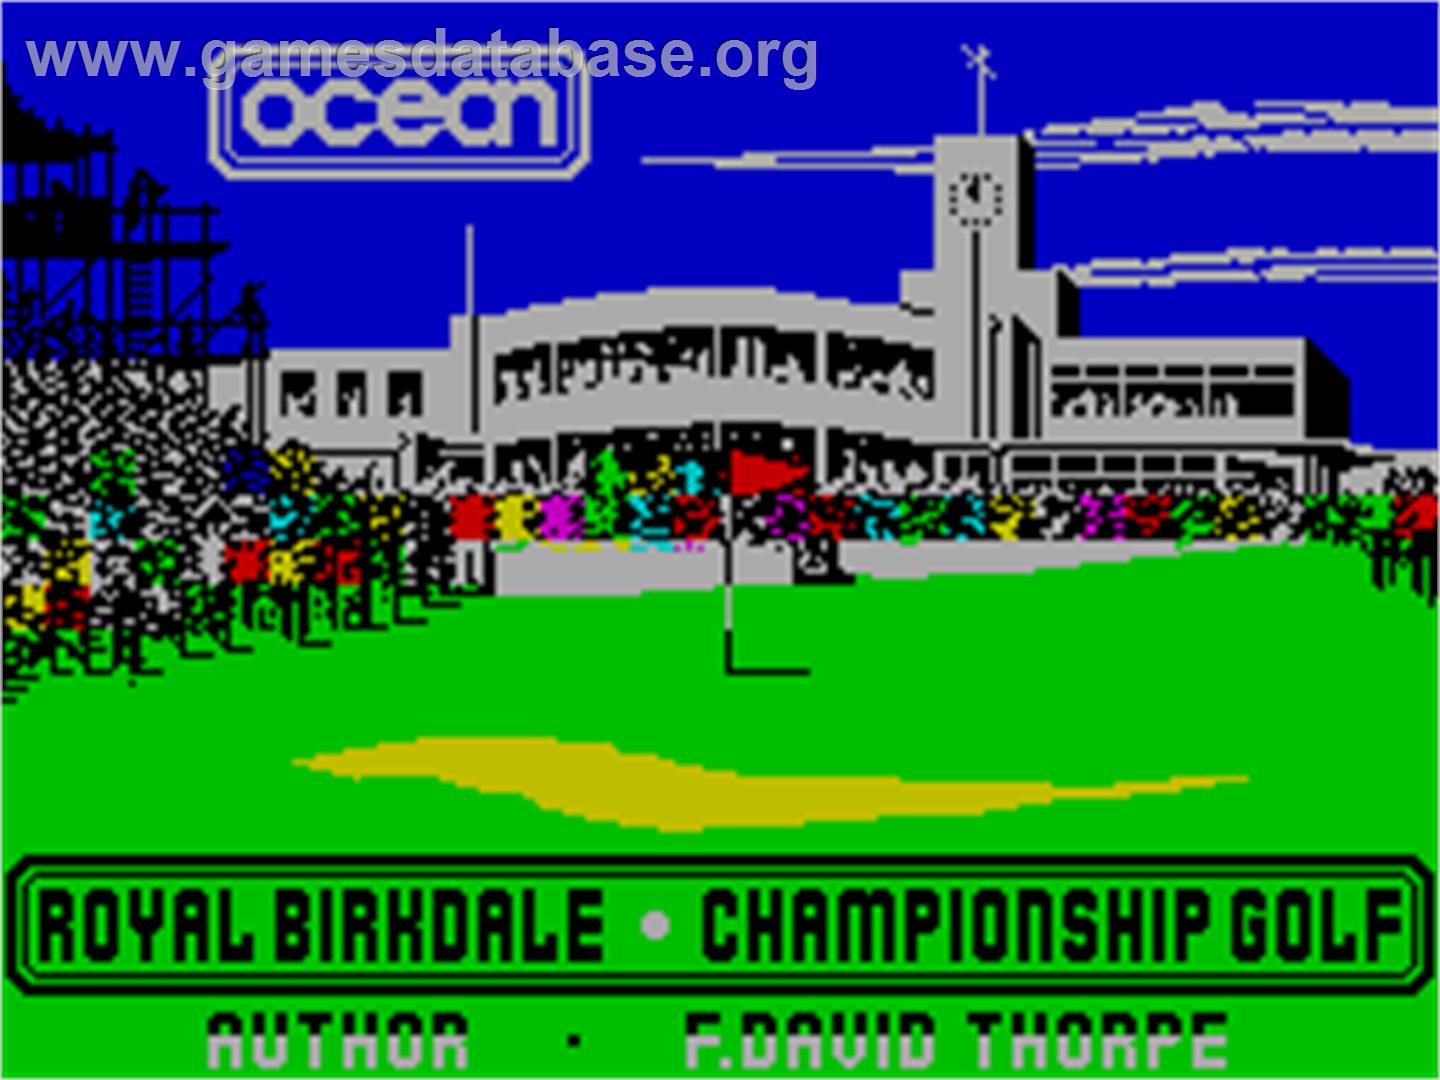 Royal Birkdale Championship Golf - Sinclair ZX Spectrum - Artwork - Title Screen